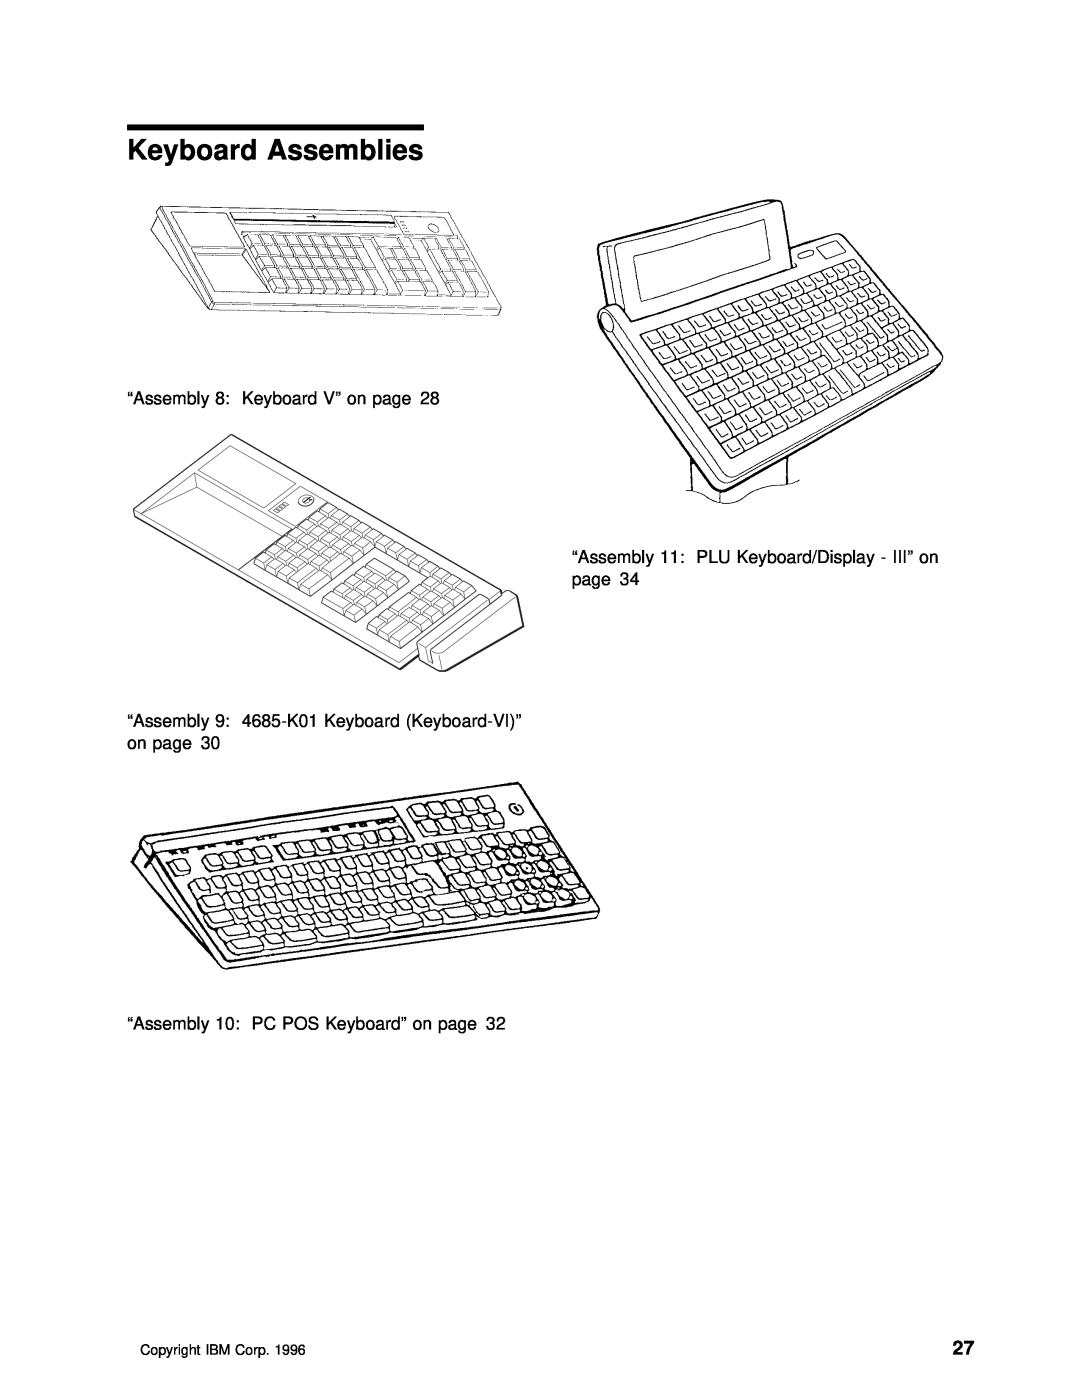 IBM 4694 DBCS FAMILY manual Keyboard Assemblies, “Assembly 8 Keyboard V” on page, “Assembly 10 PC POS Keyboard” on page 